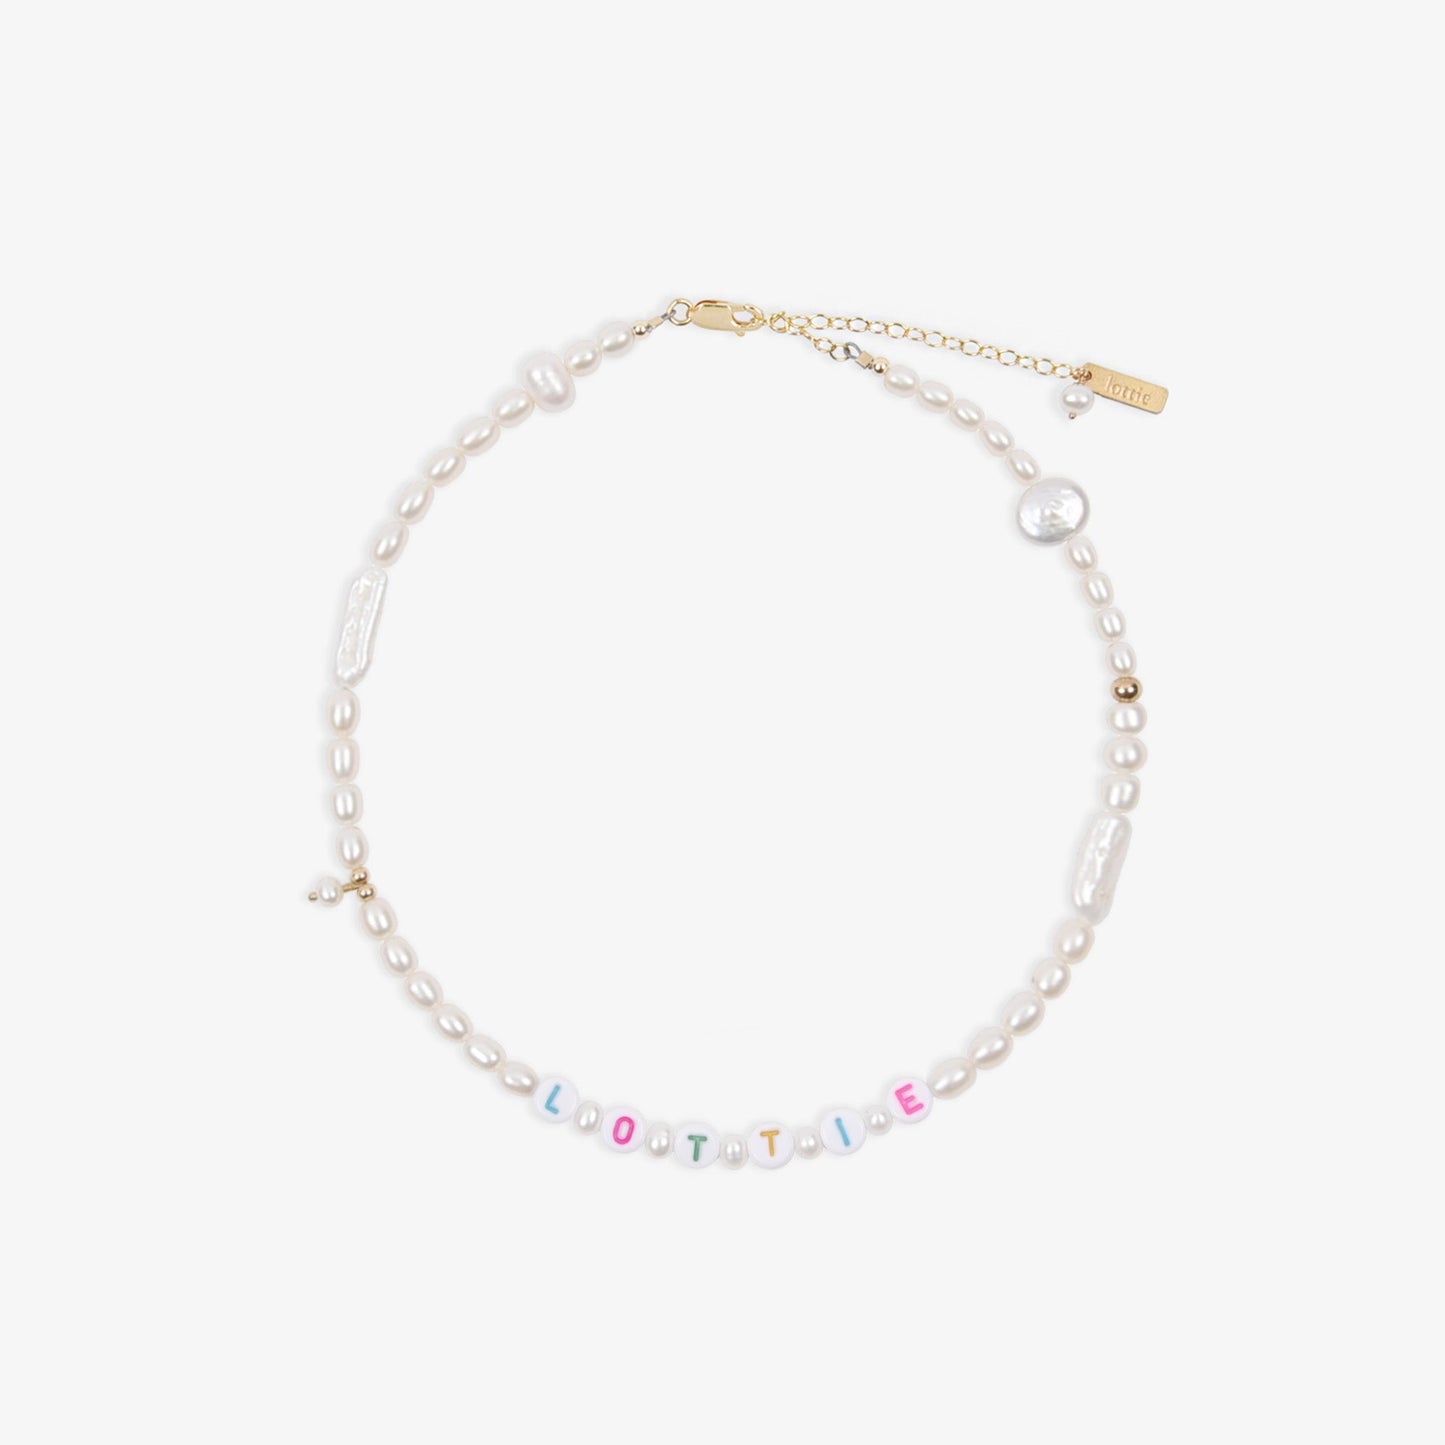 Gigi pearl necklace - customizable